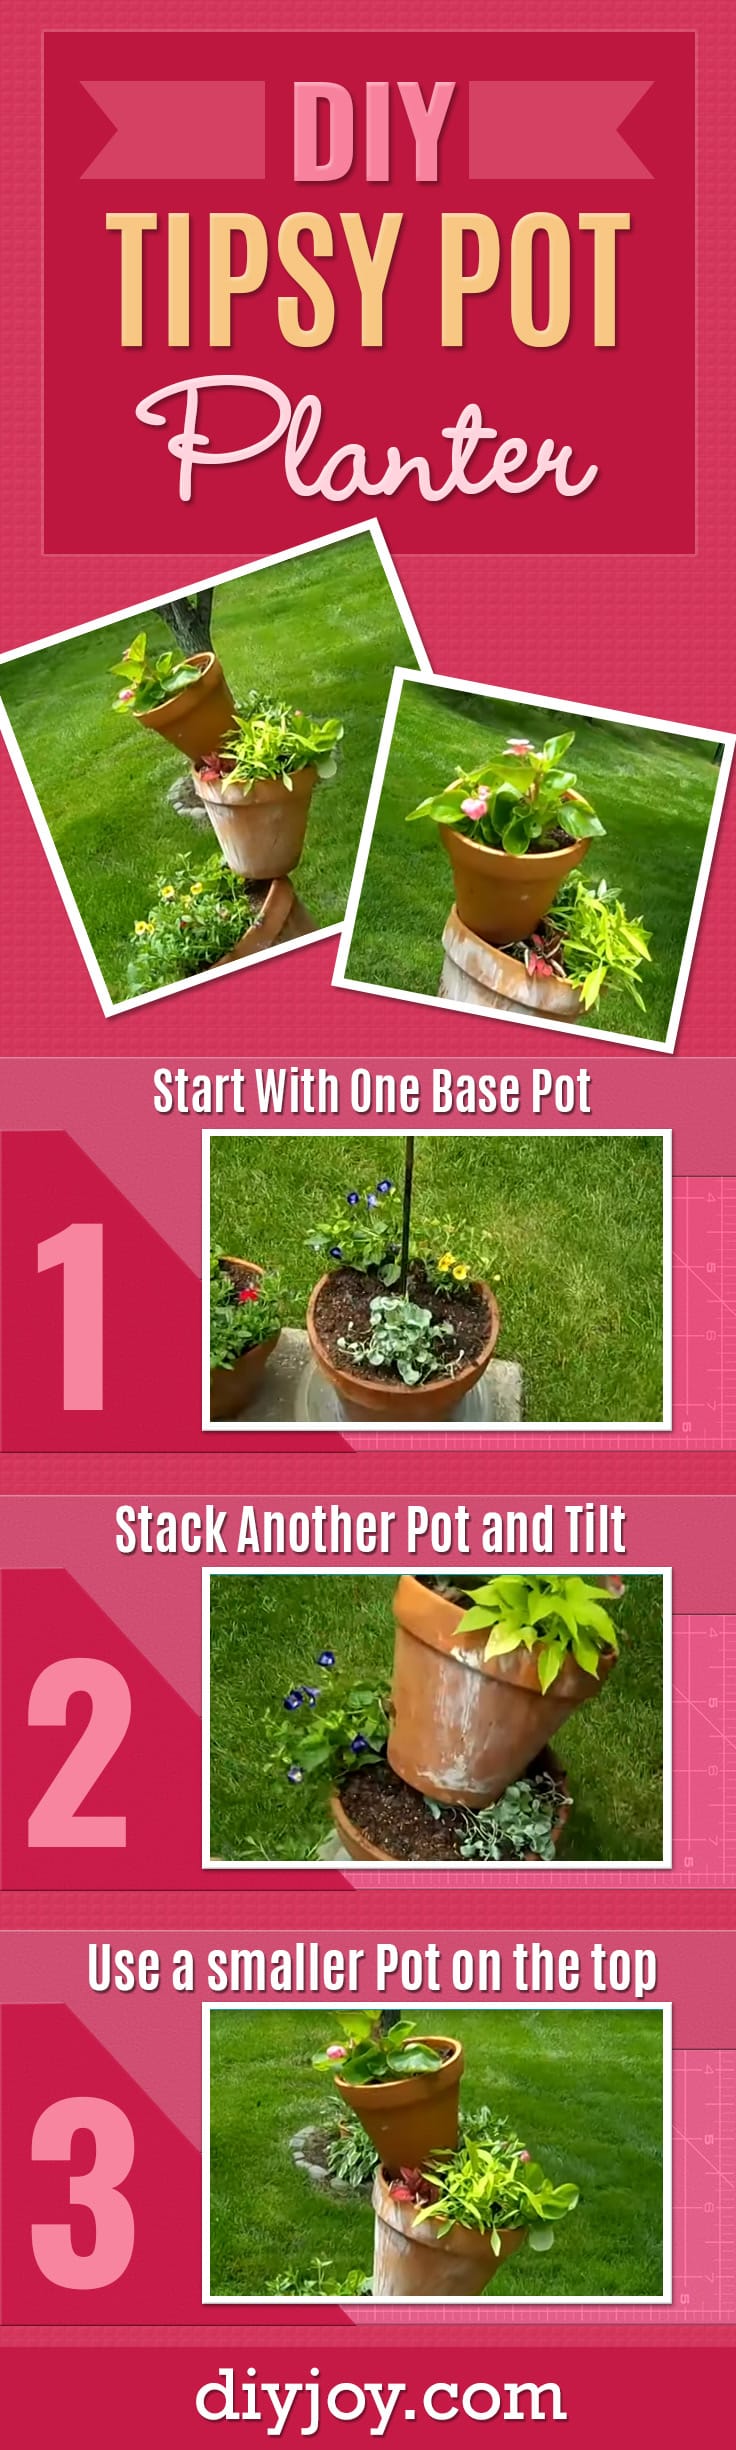 DIY Ideas for The Backyard Garden - Home and Outdoor Decor On a Budget - Creative Planter for Your Plants Tutorial Videos